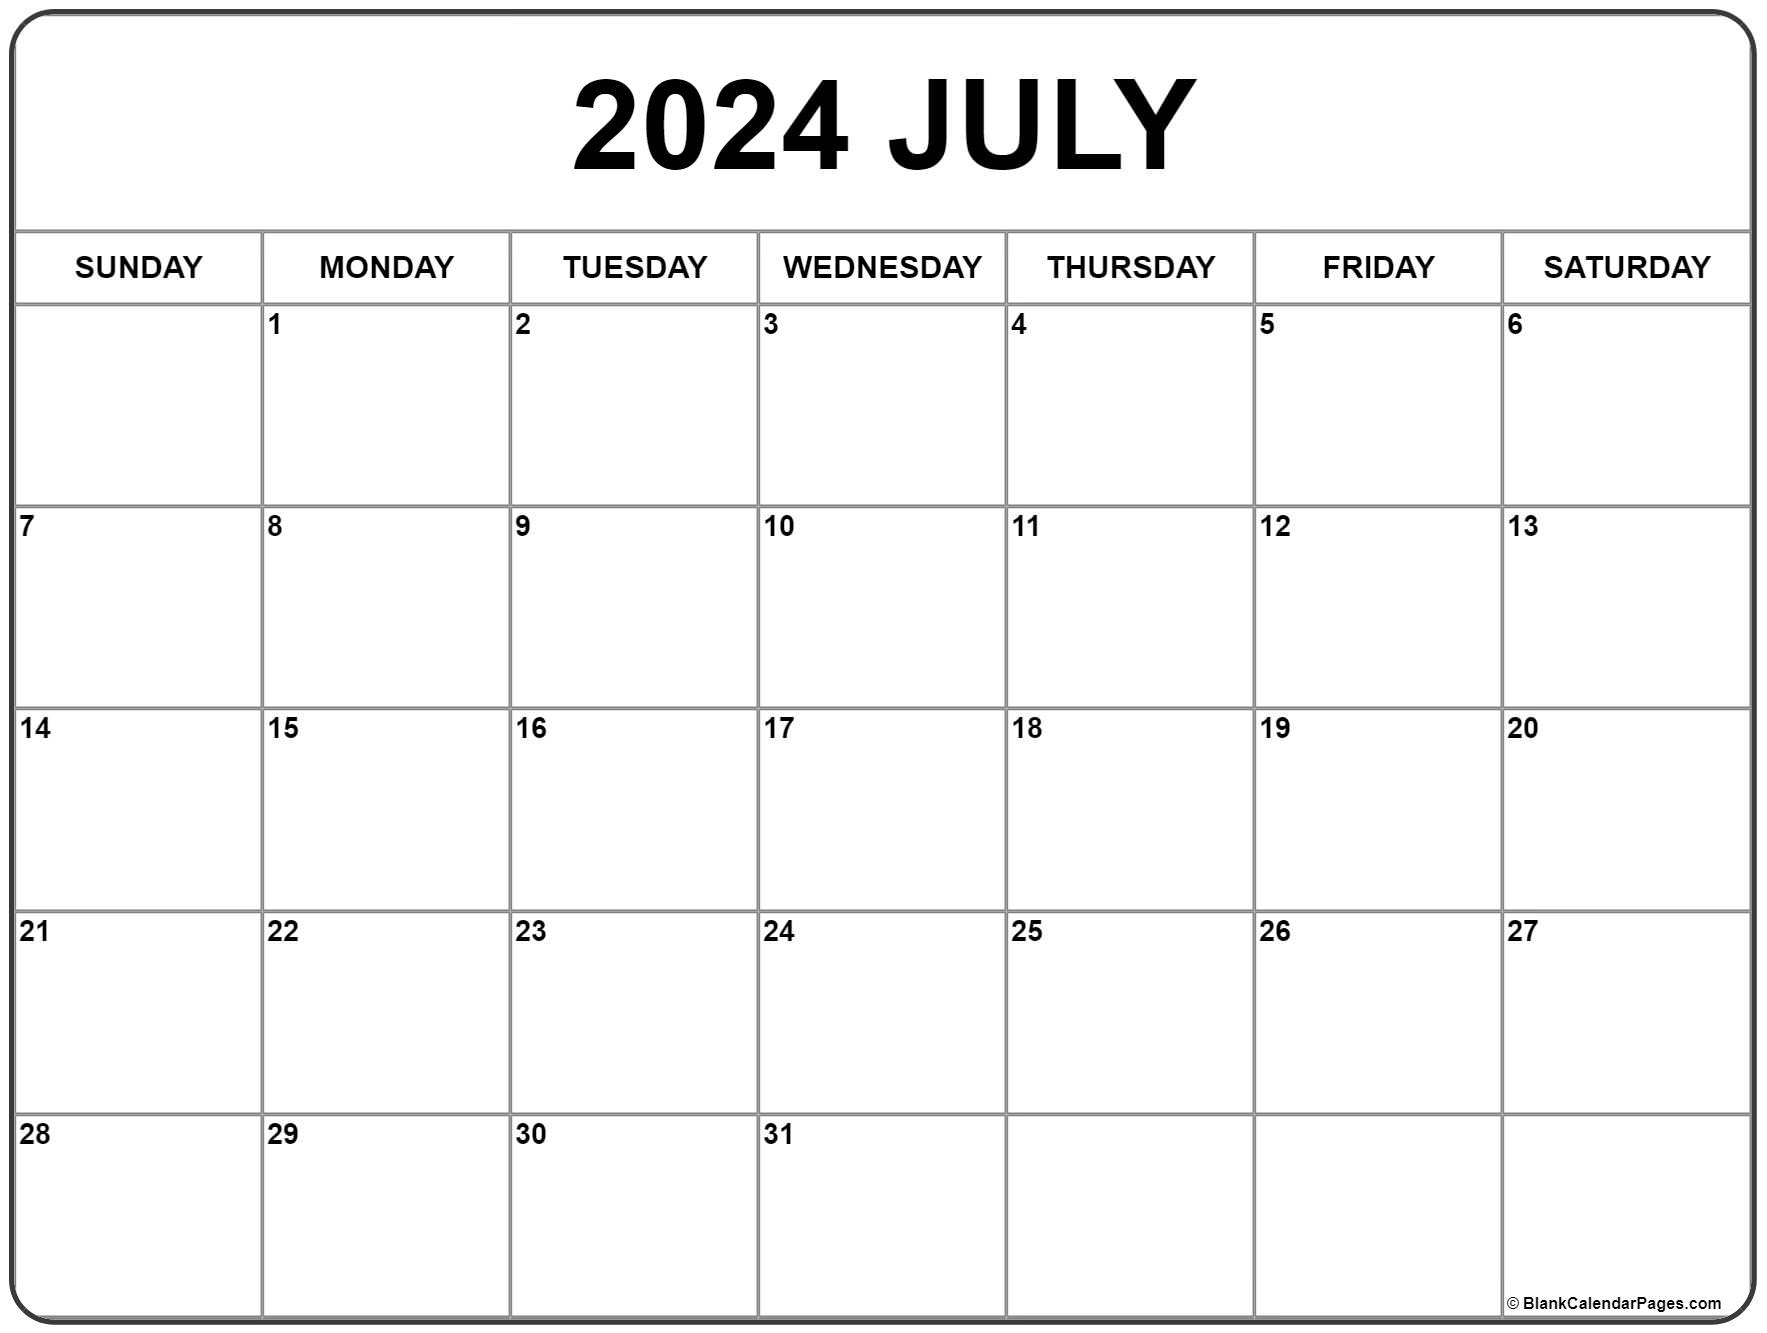 July 2024 Calendar | Free Printable Calendar | Show Me The Calendar Month Of July 2024